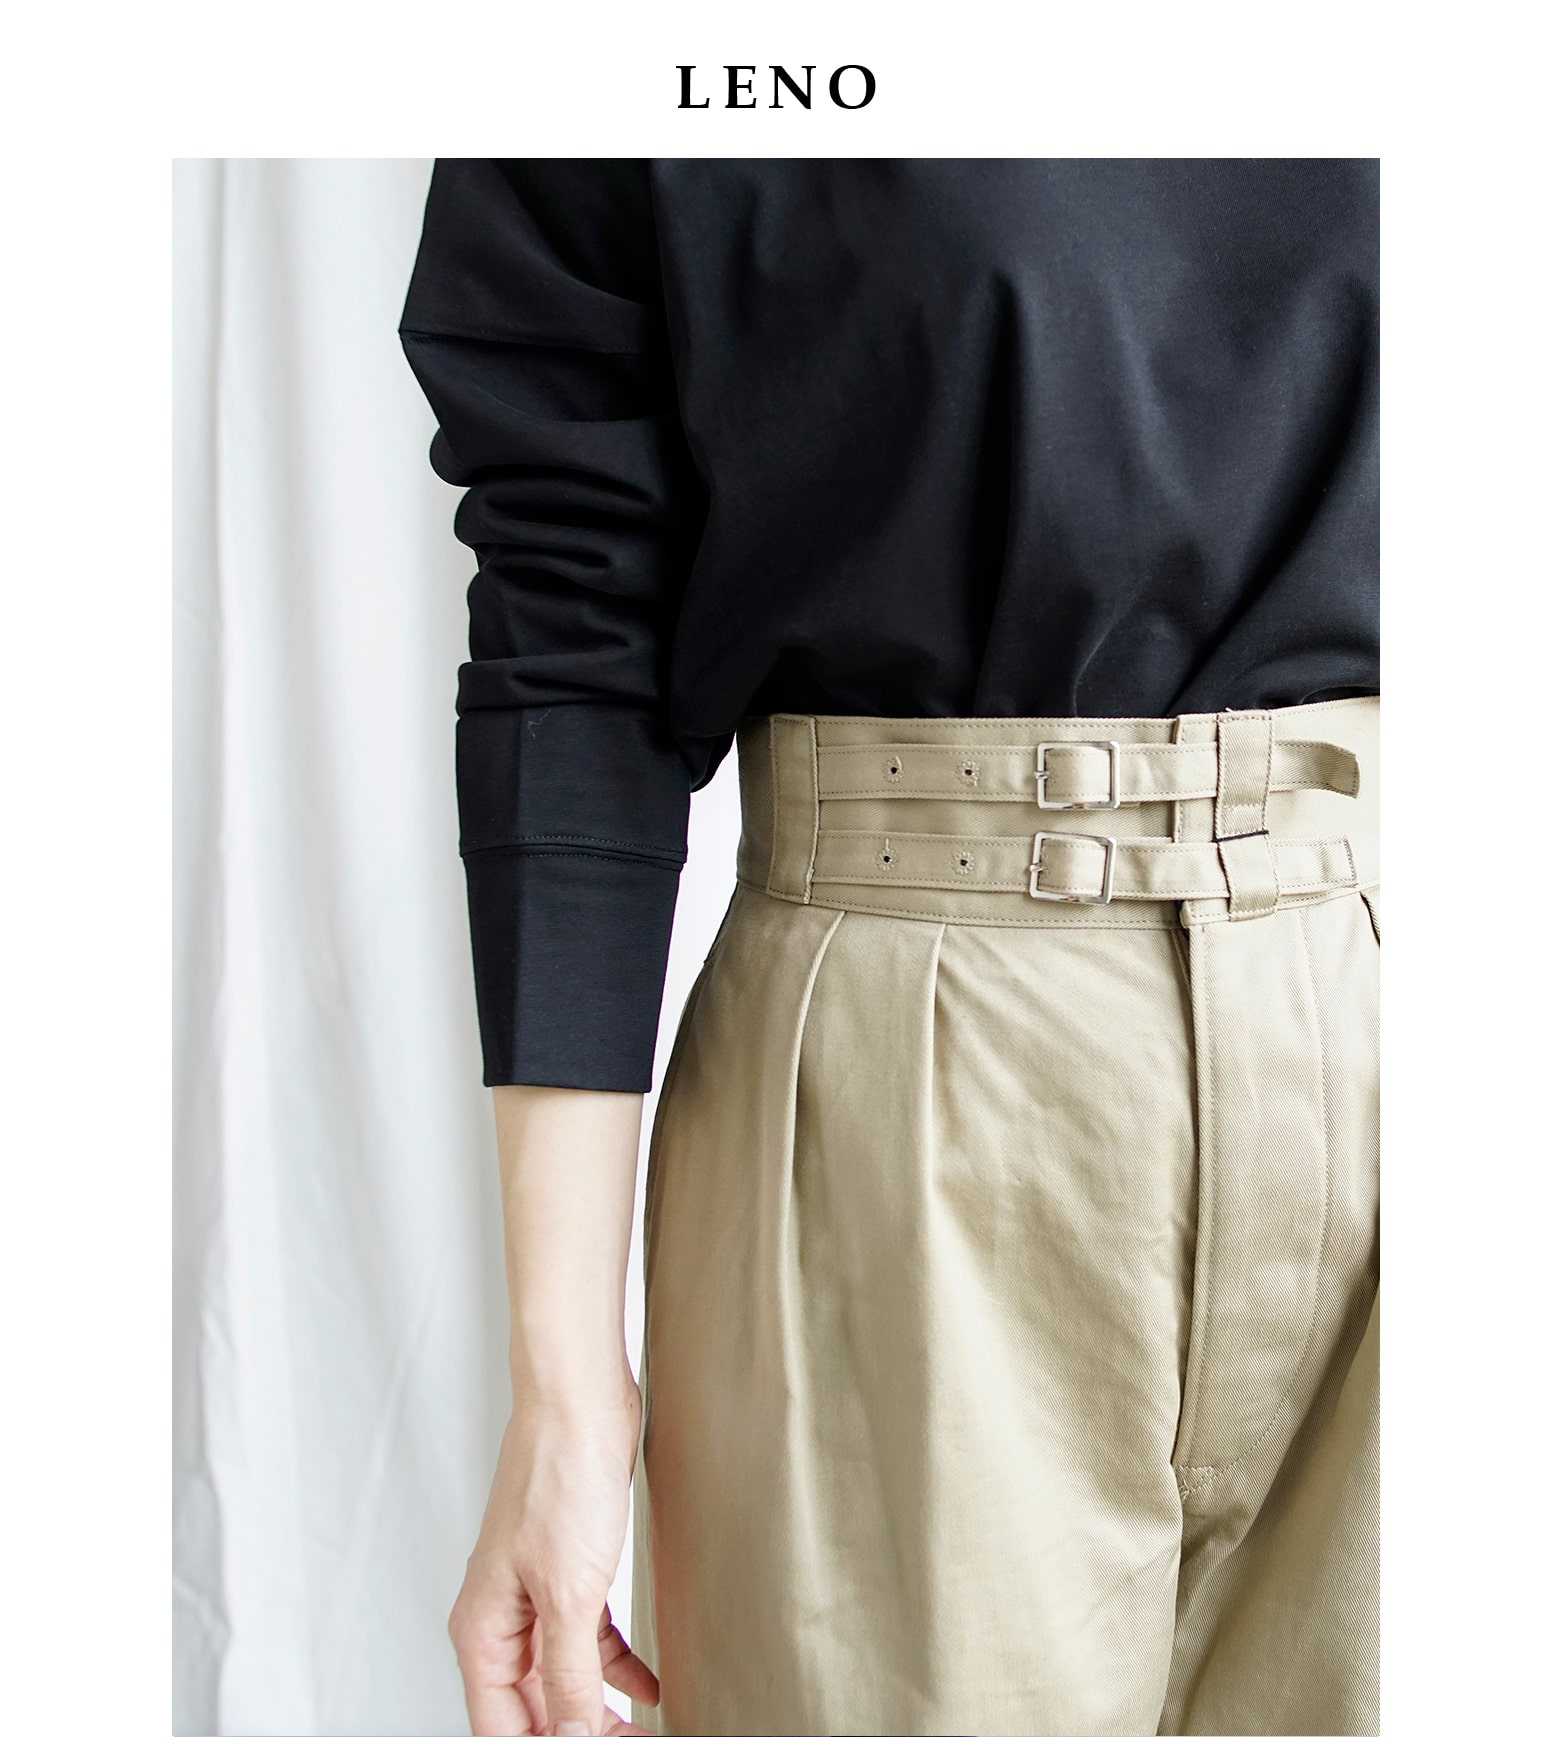 LENO(リノ)ダブルベルトグルカトラウザーズ“Double Belted Gurkha Trousers” leno-pt001【サイズ交換初回無料】  | iroma..aranciato